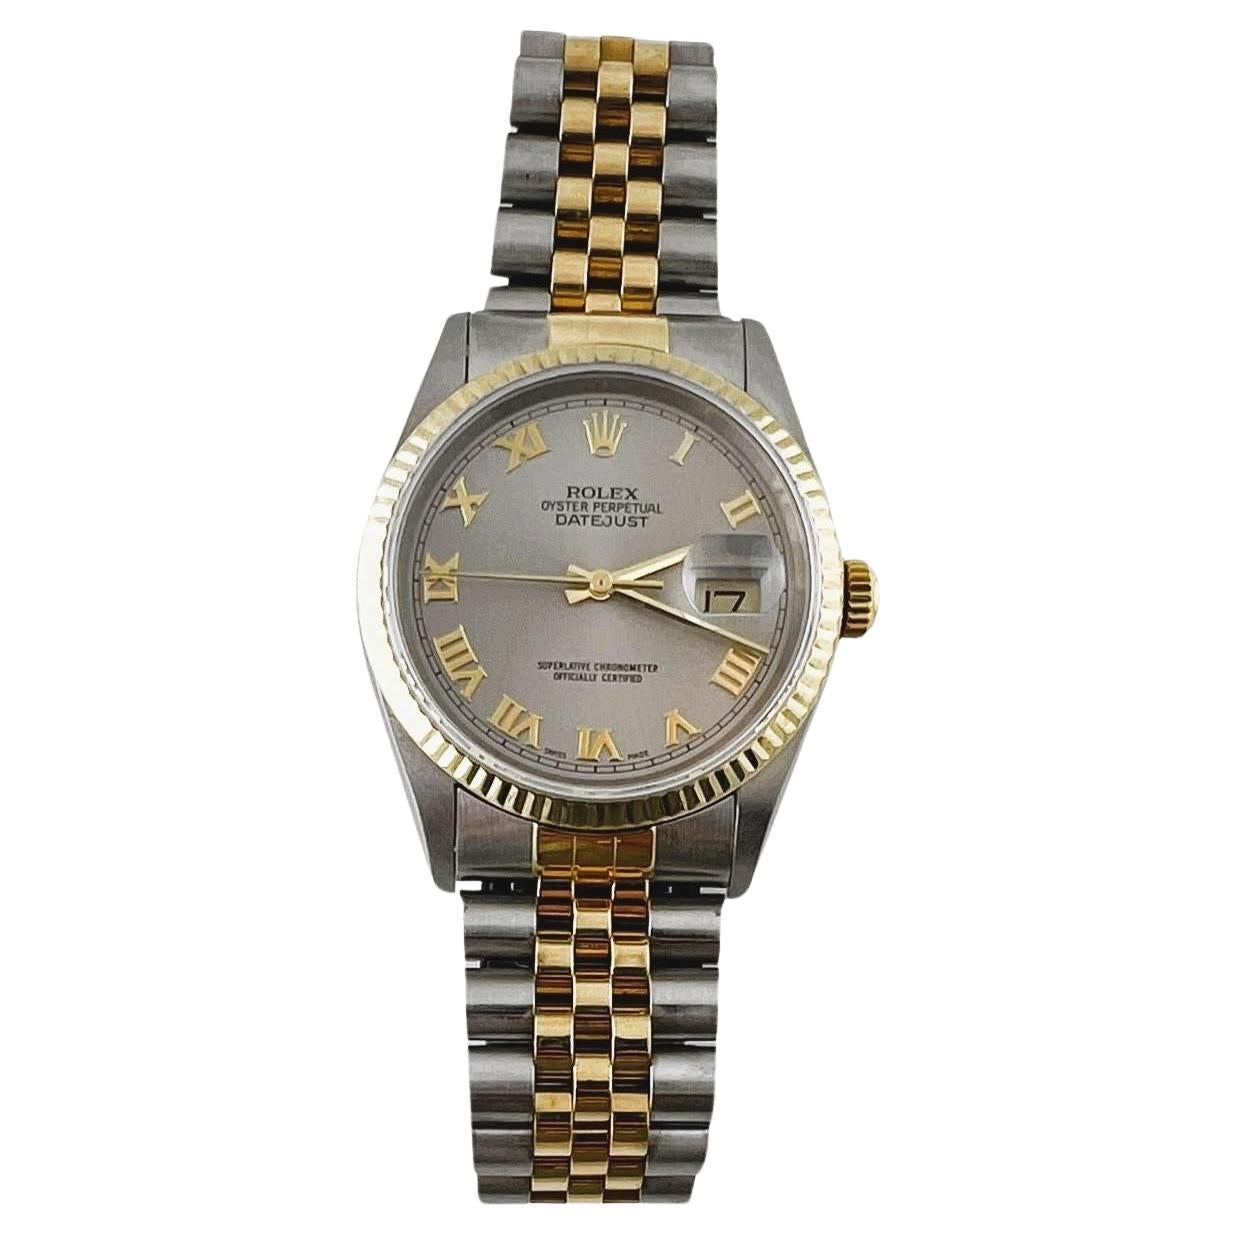 2000 Rolex Men's Datejust 16203 Two Tone Watch Jubilee Slate Box/Papers #17633